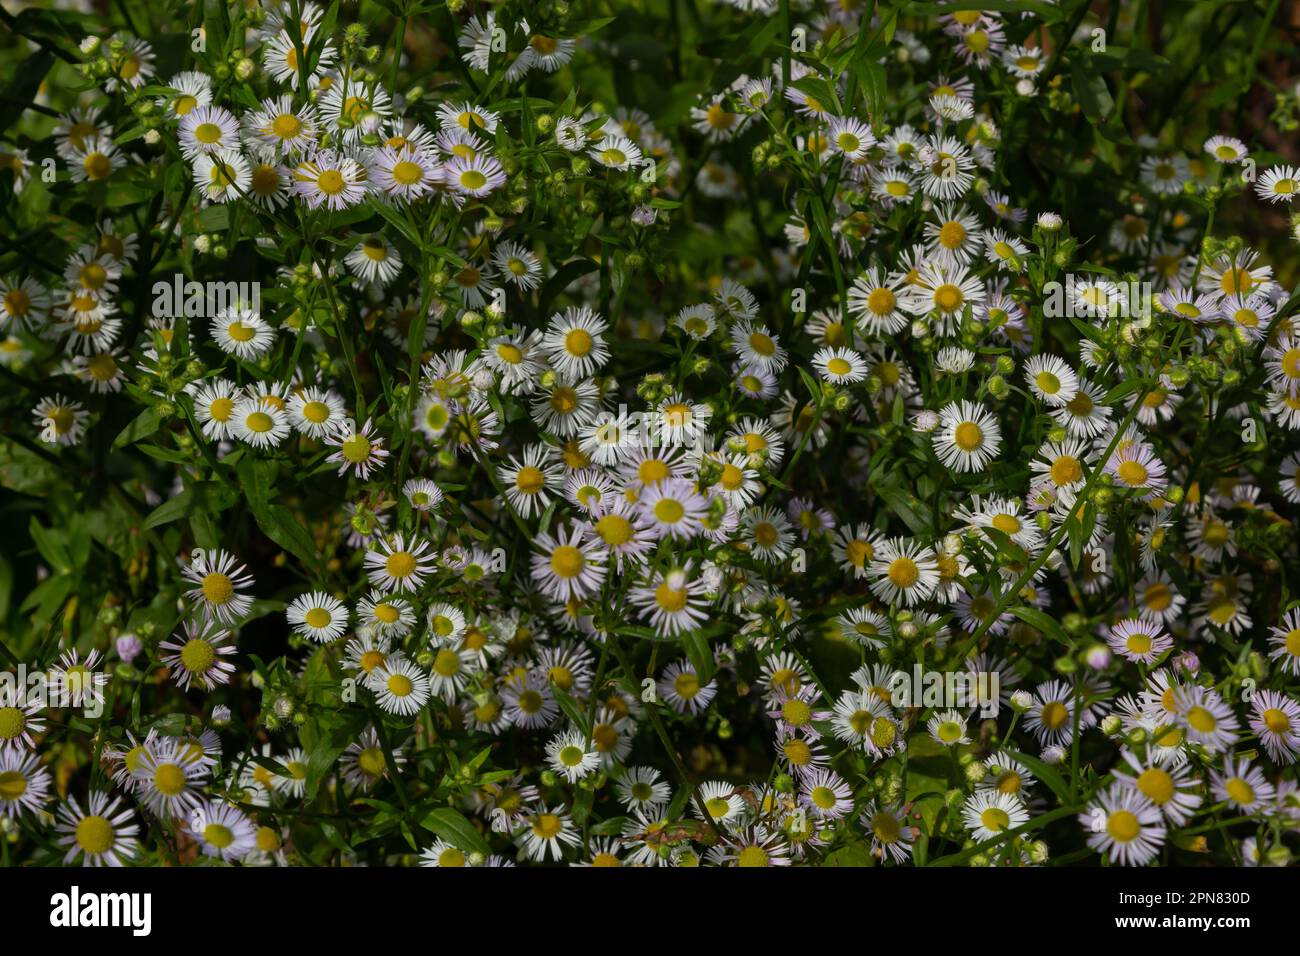 Erigeron Annuus Flowers, also known as fleabane, daisy fleabane, or eastern daisy fleabane, growing in the meadow under the warm summer sun, Ukraine. Stock Photo